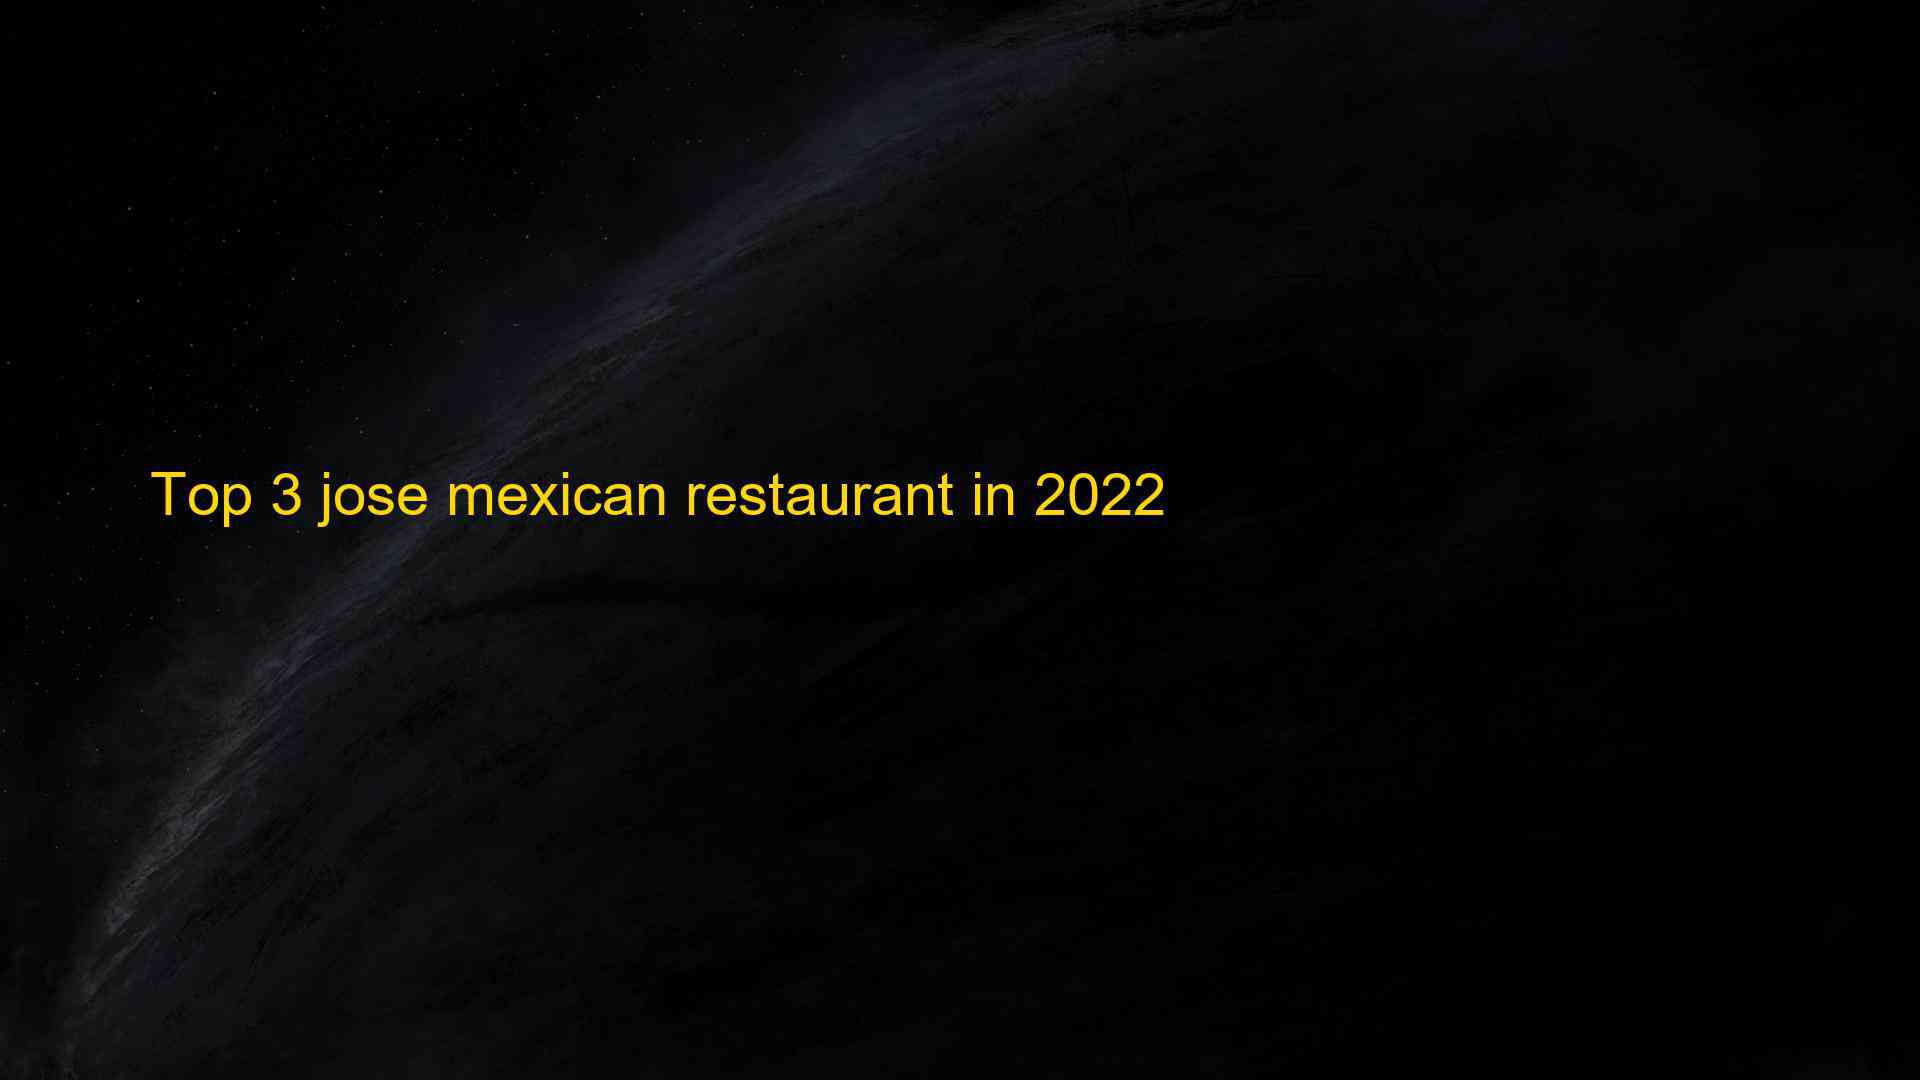 Top 3 jose mexican restaurant in 2022 1663178358